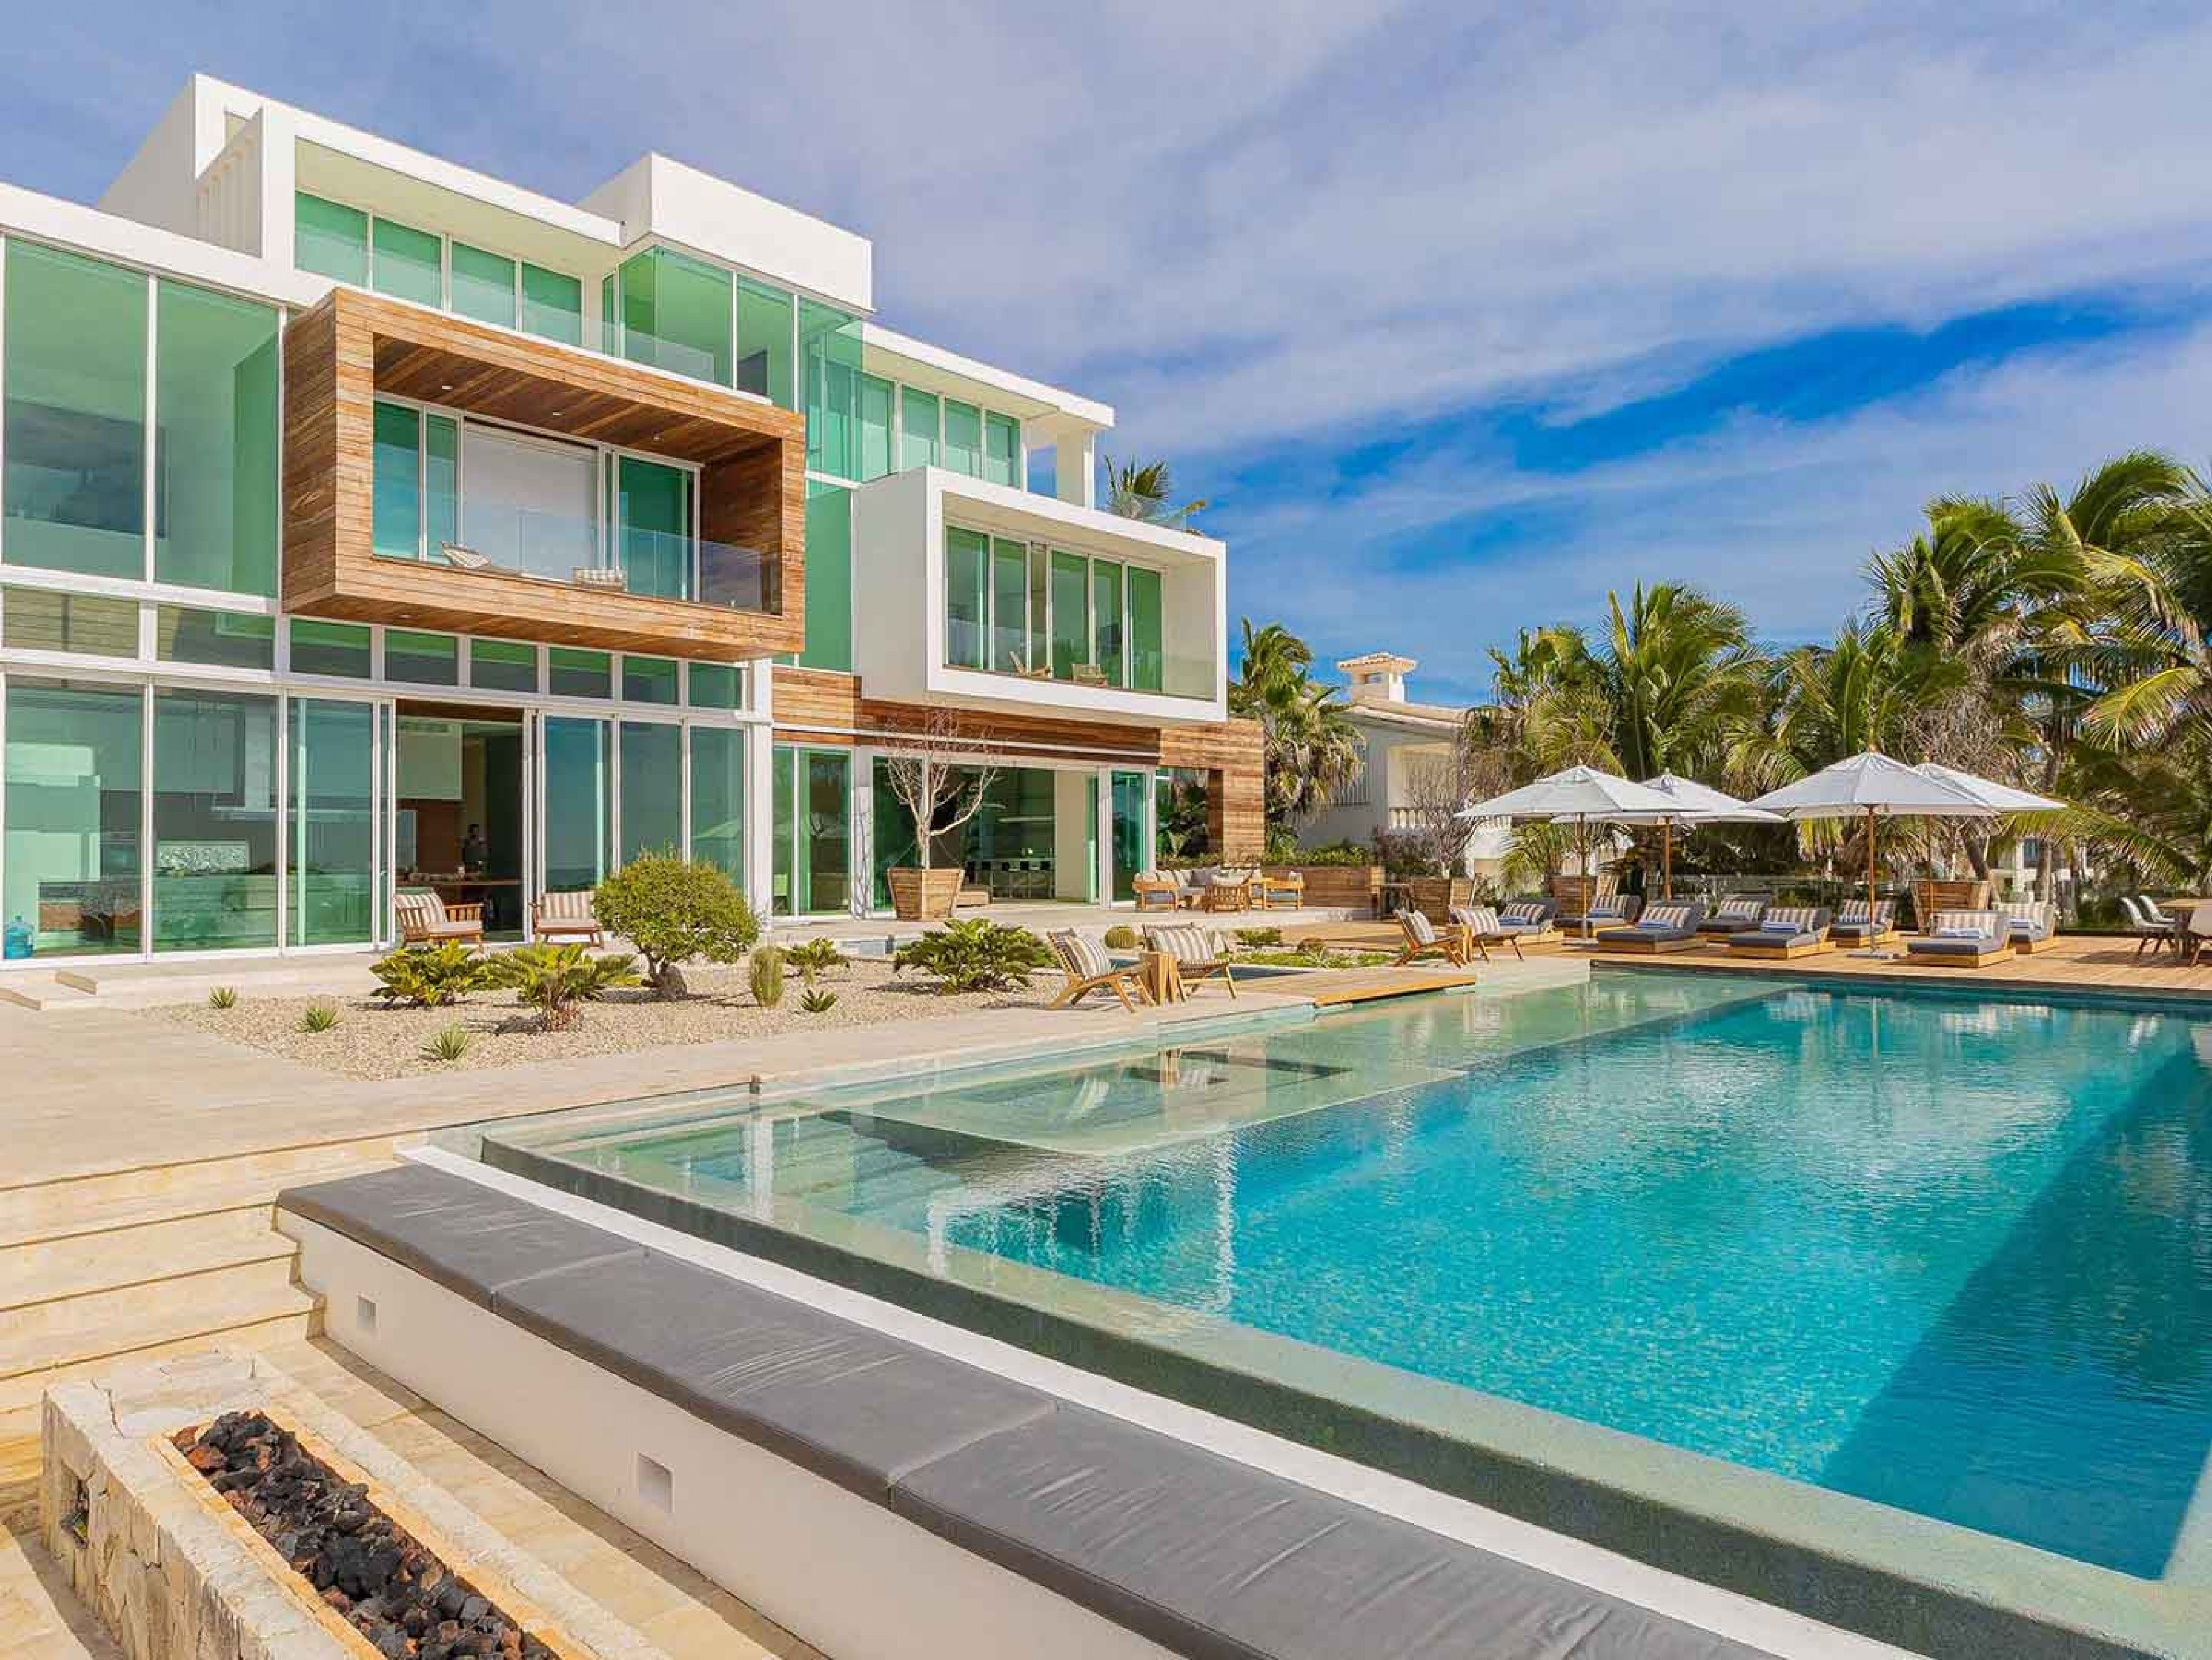 Casa Ocho villa with games room and pool